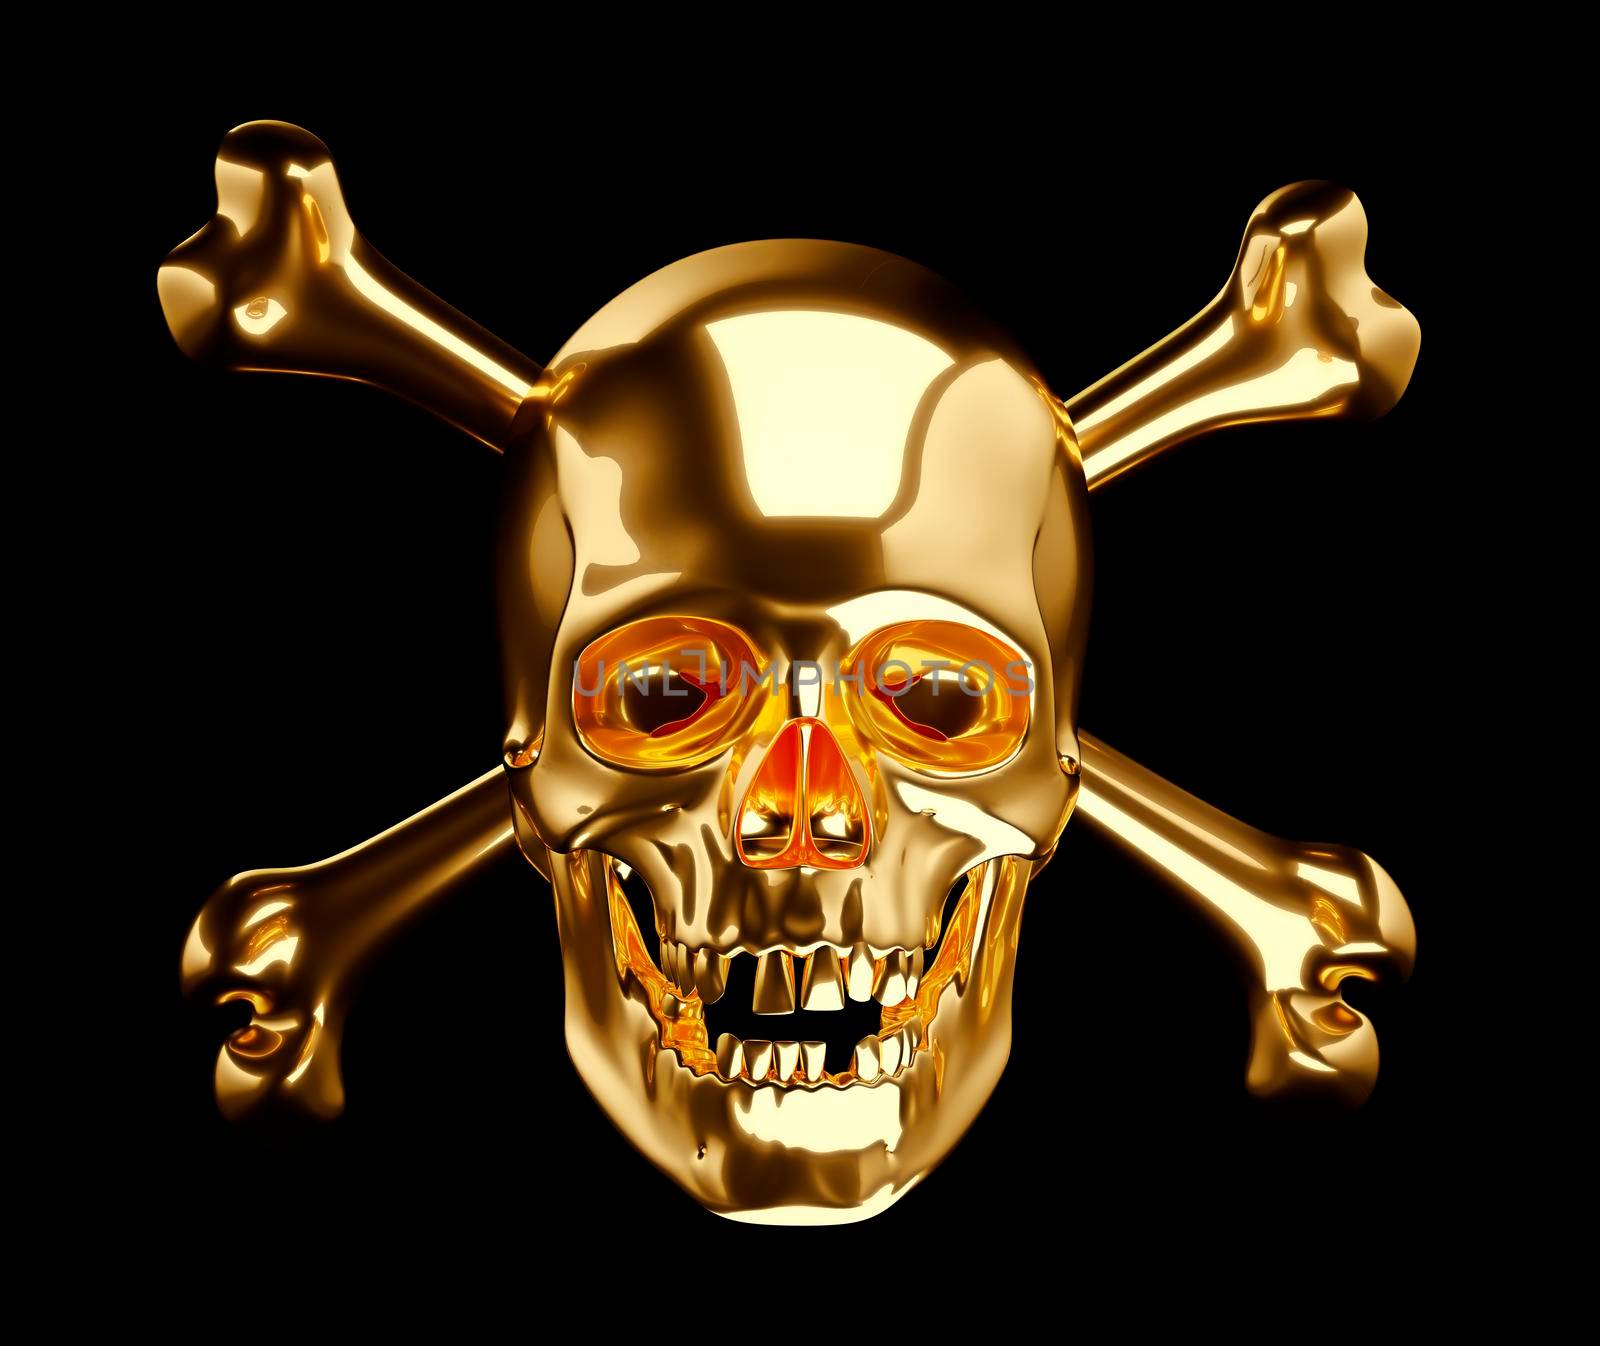 Golden Skull with cross bones or totenkopf on black by Arsgera